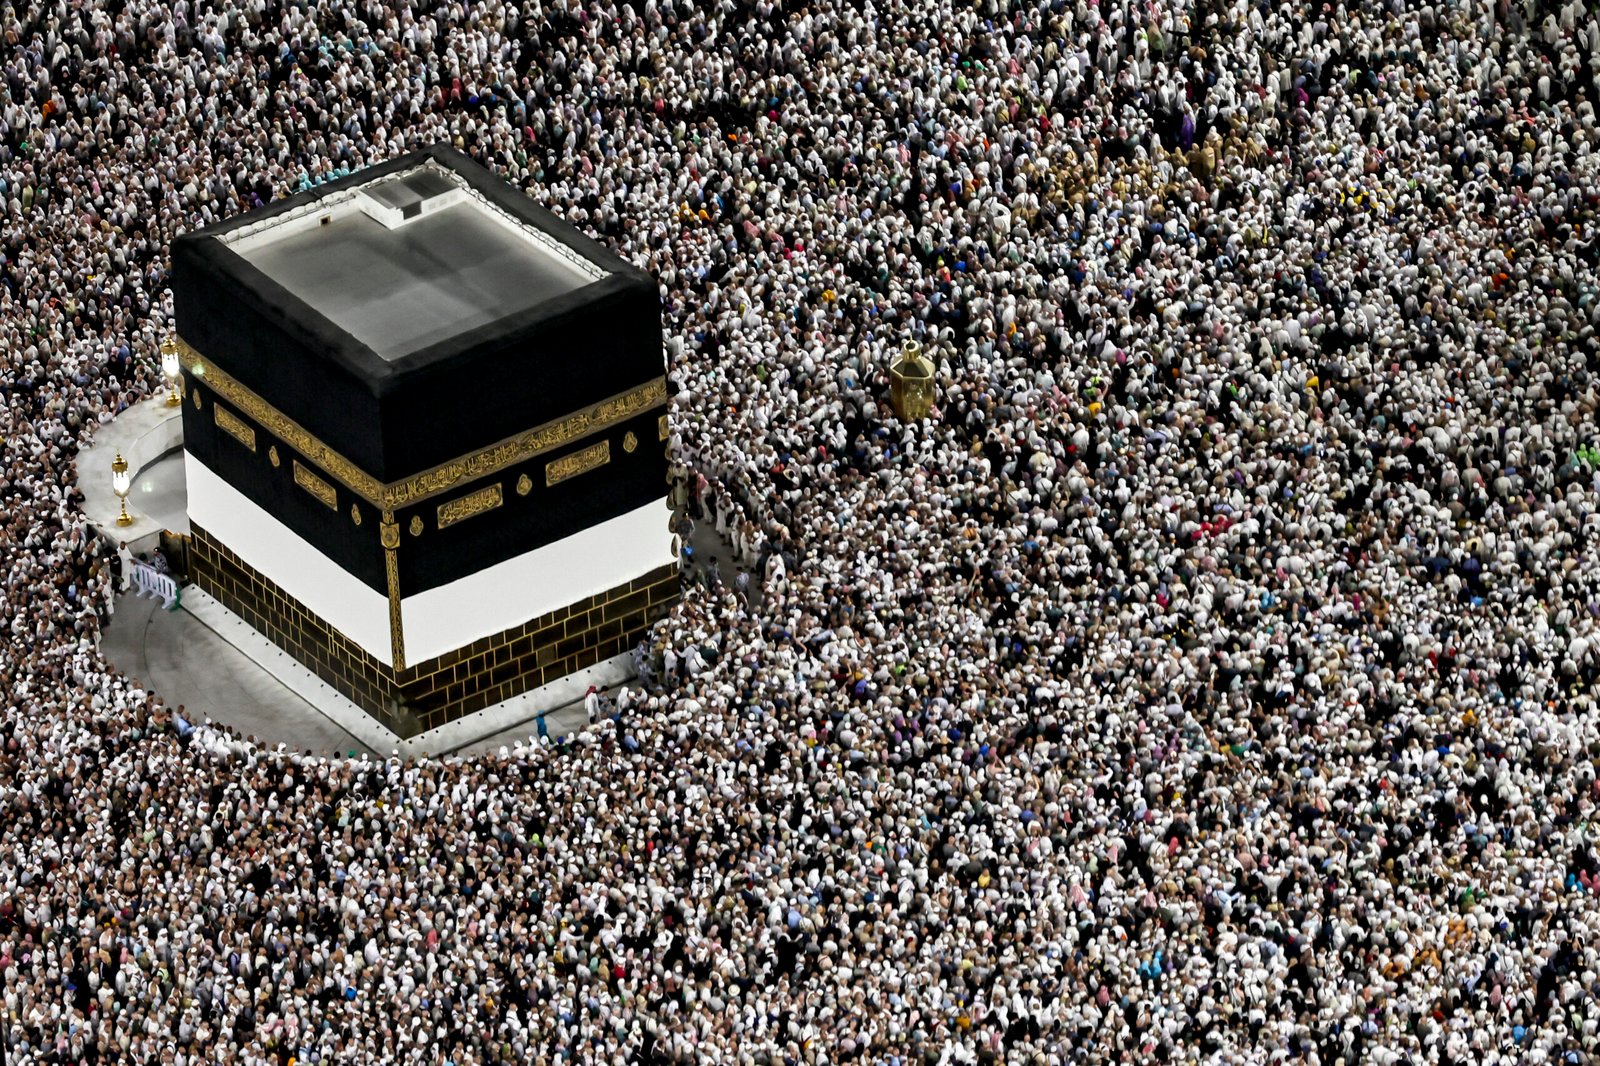 Hajj pilgrims stone the devil as Muslims mark Eid al Adha